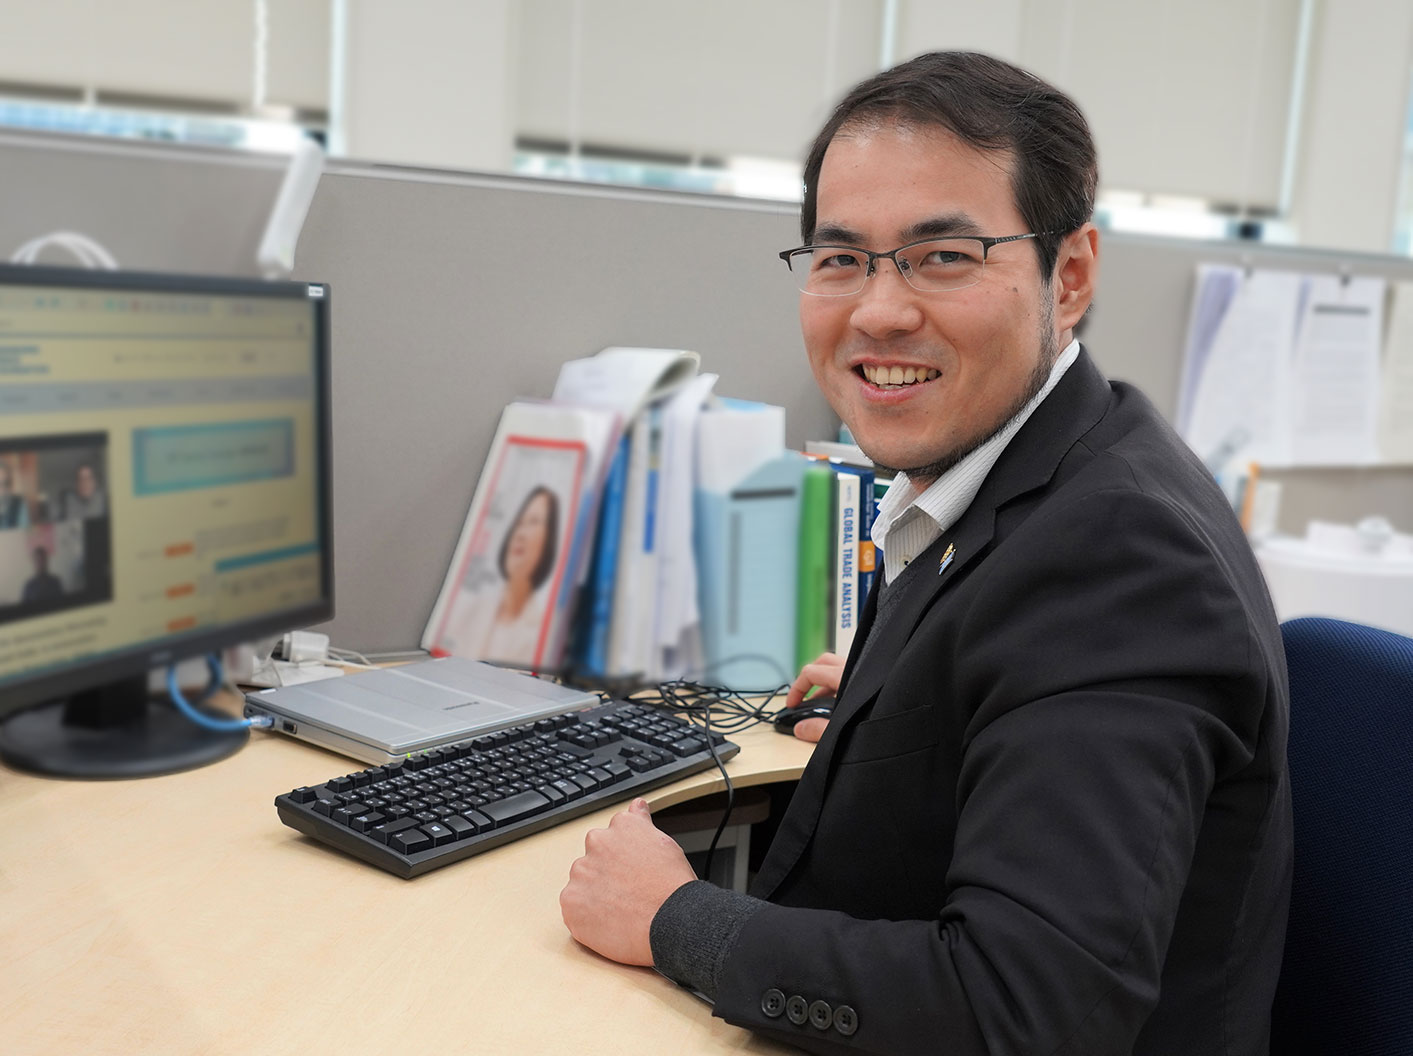 Mr. Huang sitting at his desk